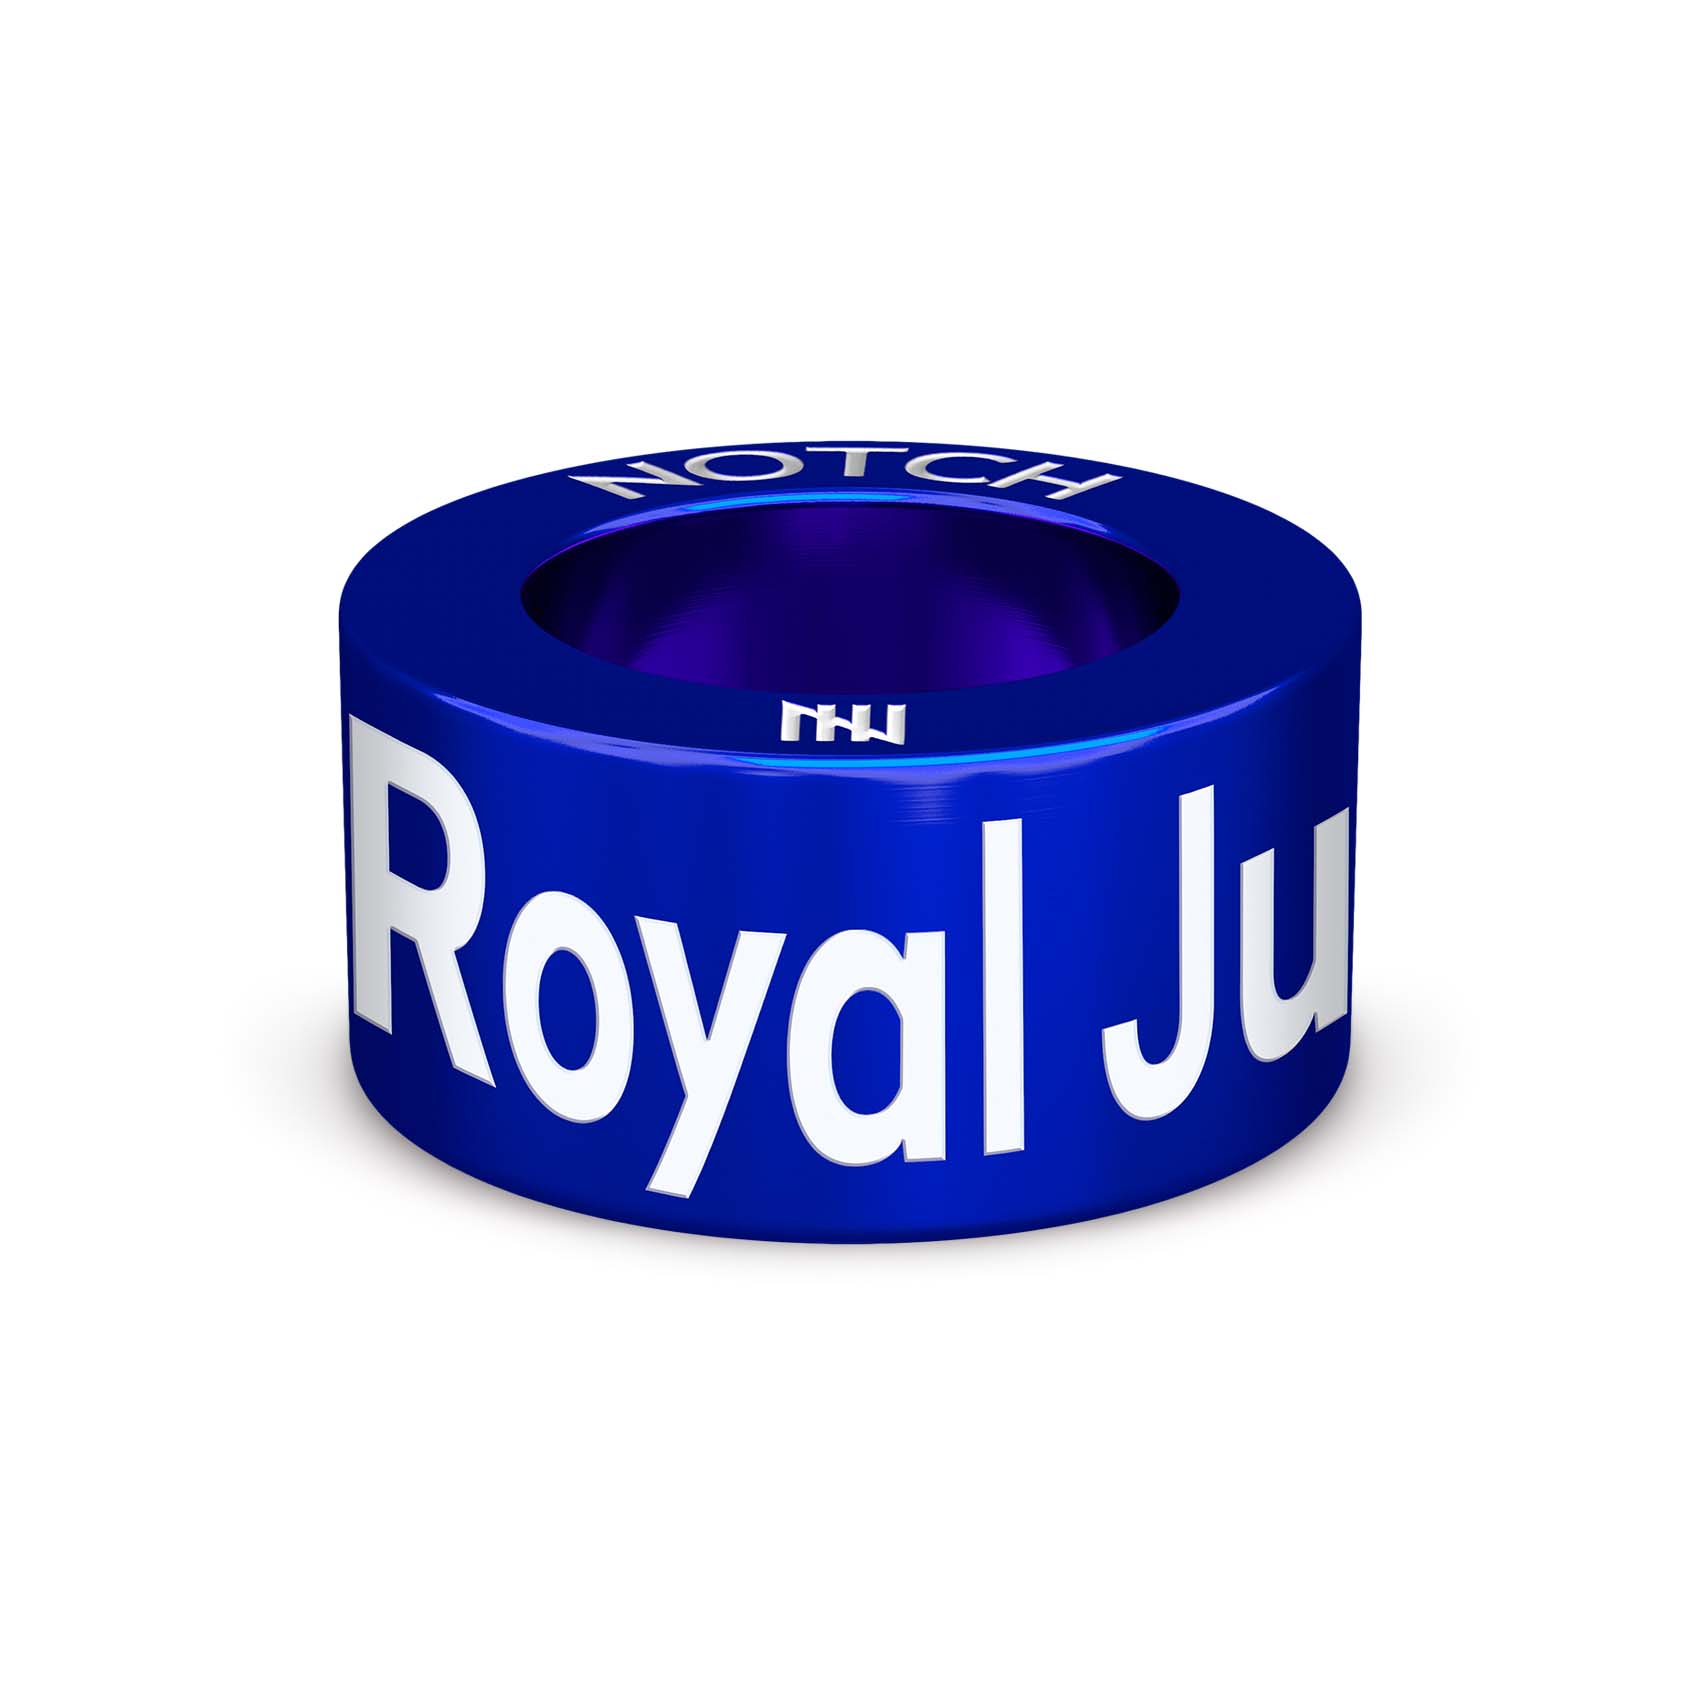 Royal Jubilee NOTCH Charm